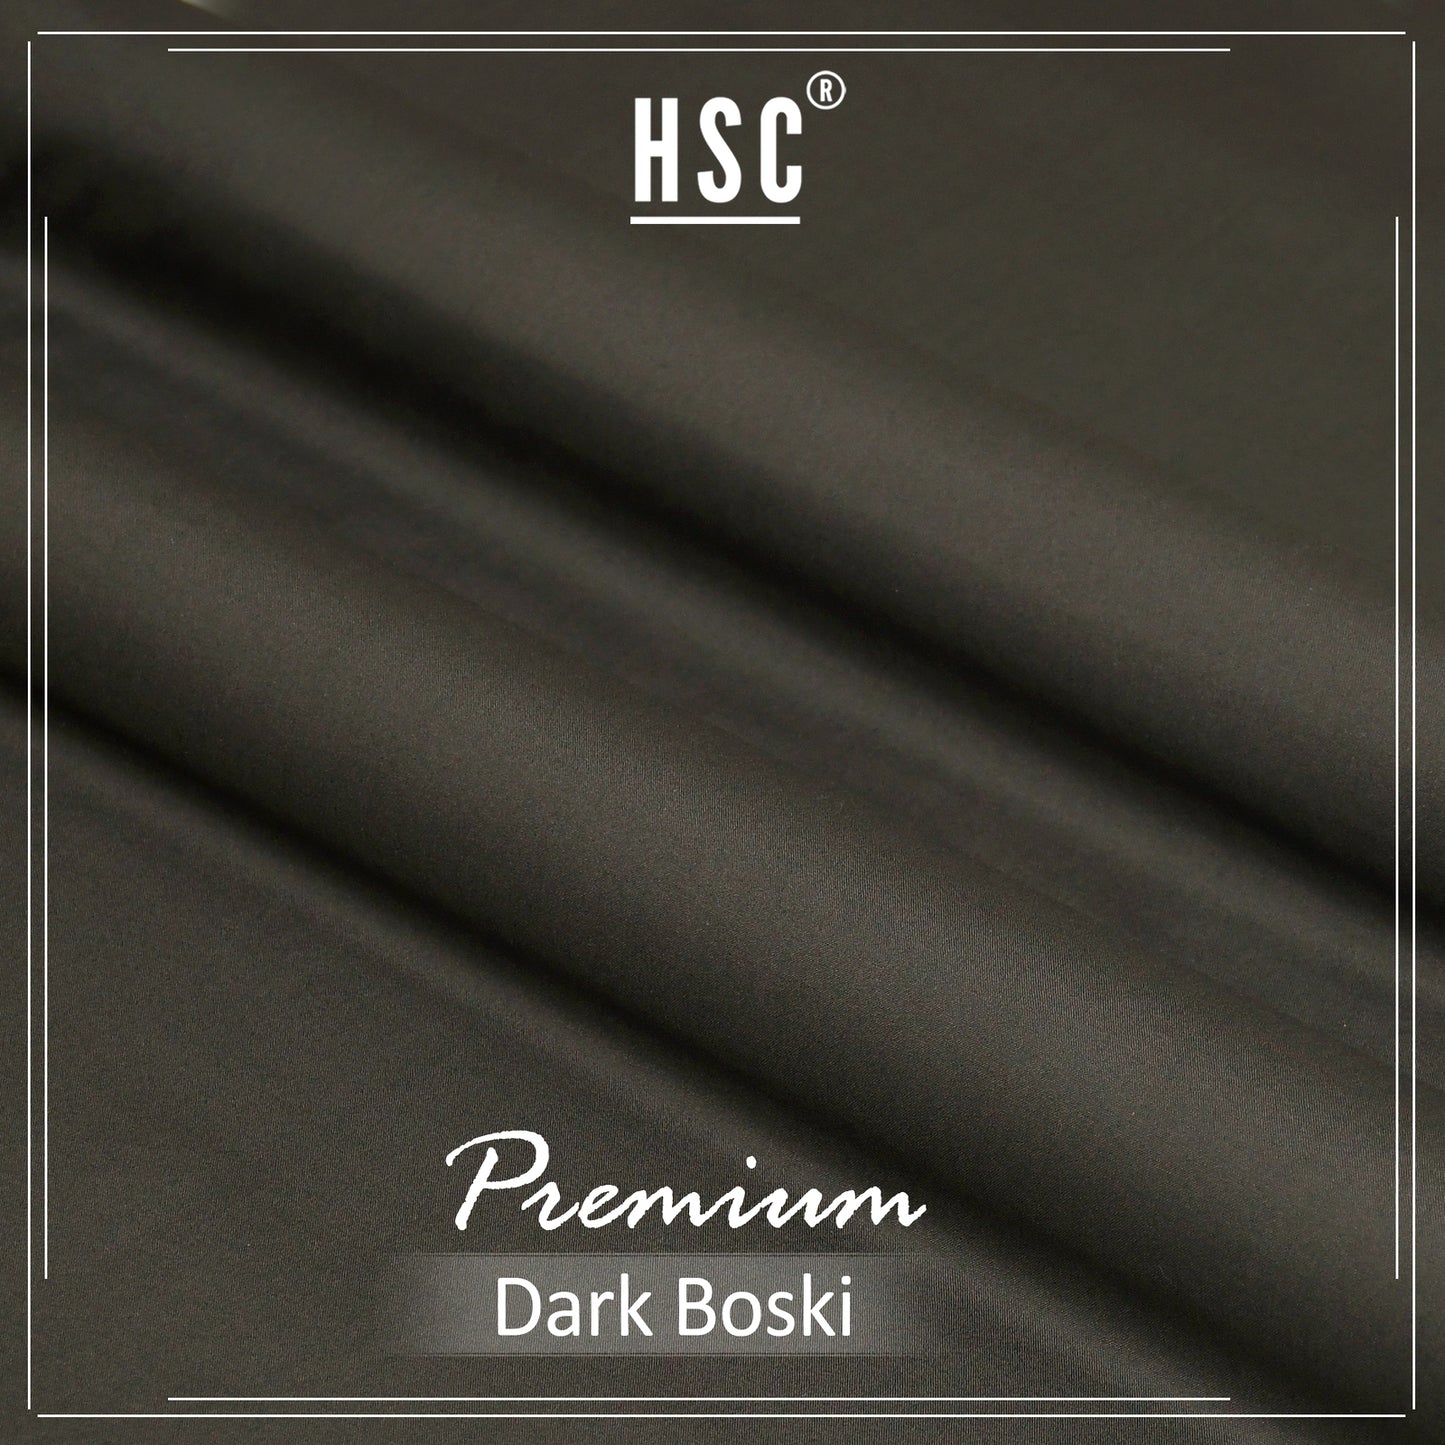 Buy1 Get 1 Free Premium Dark Boski For Men - PDB14 HSC